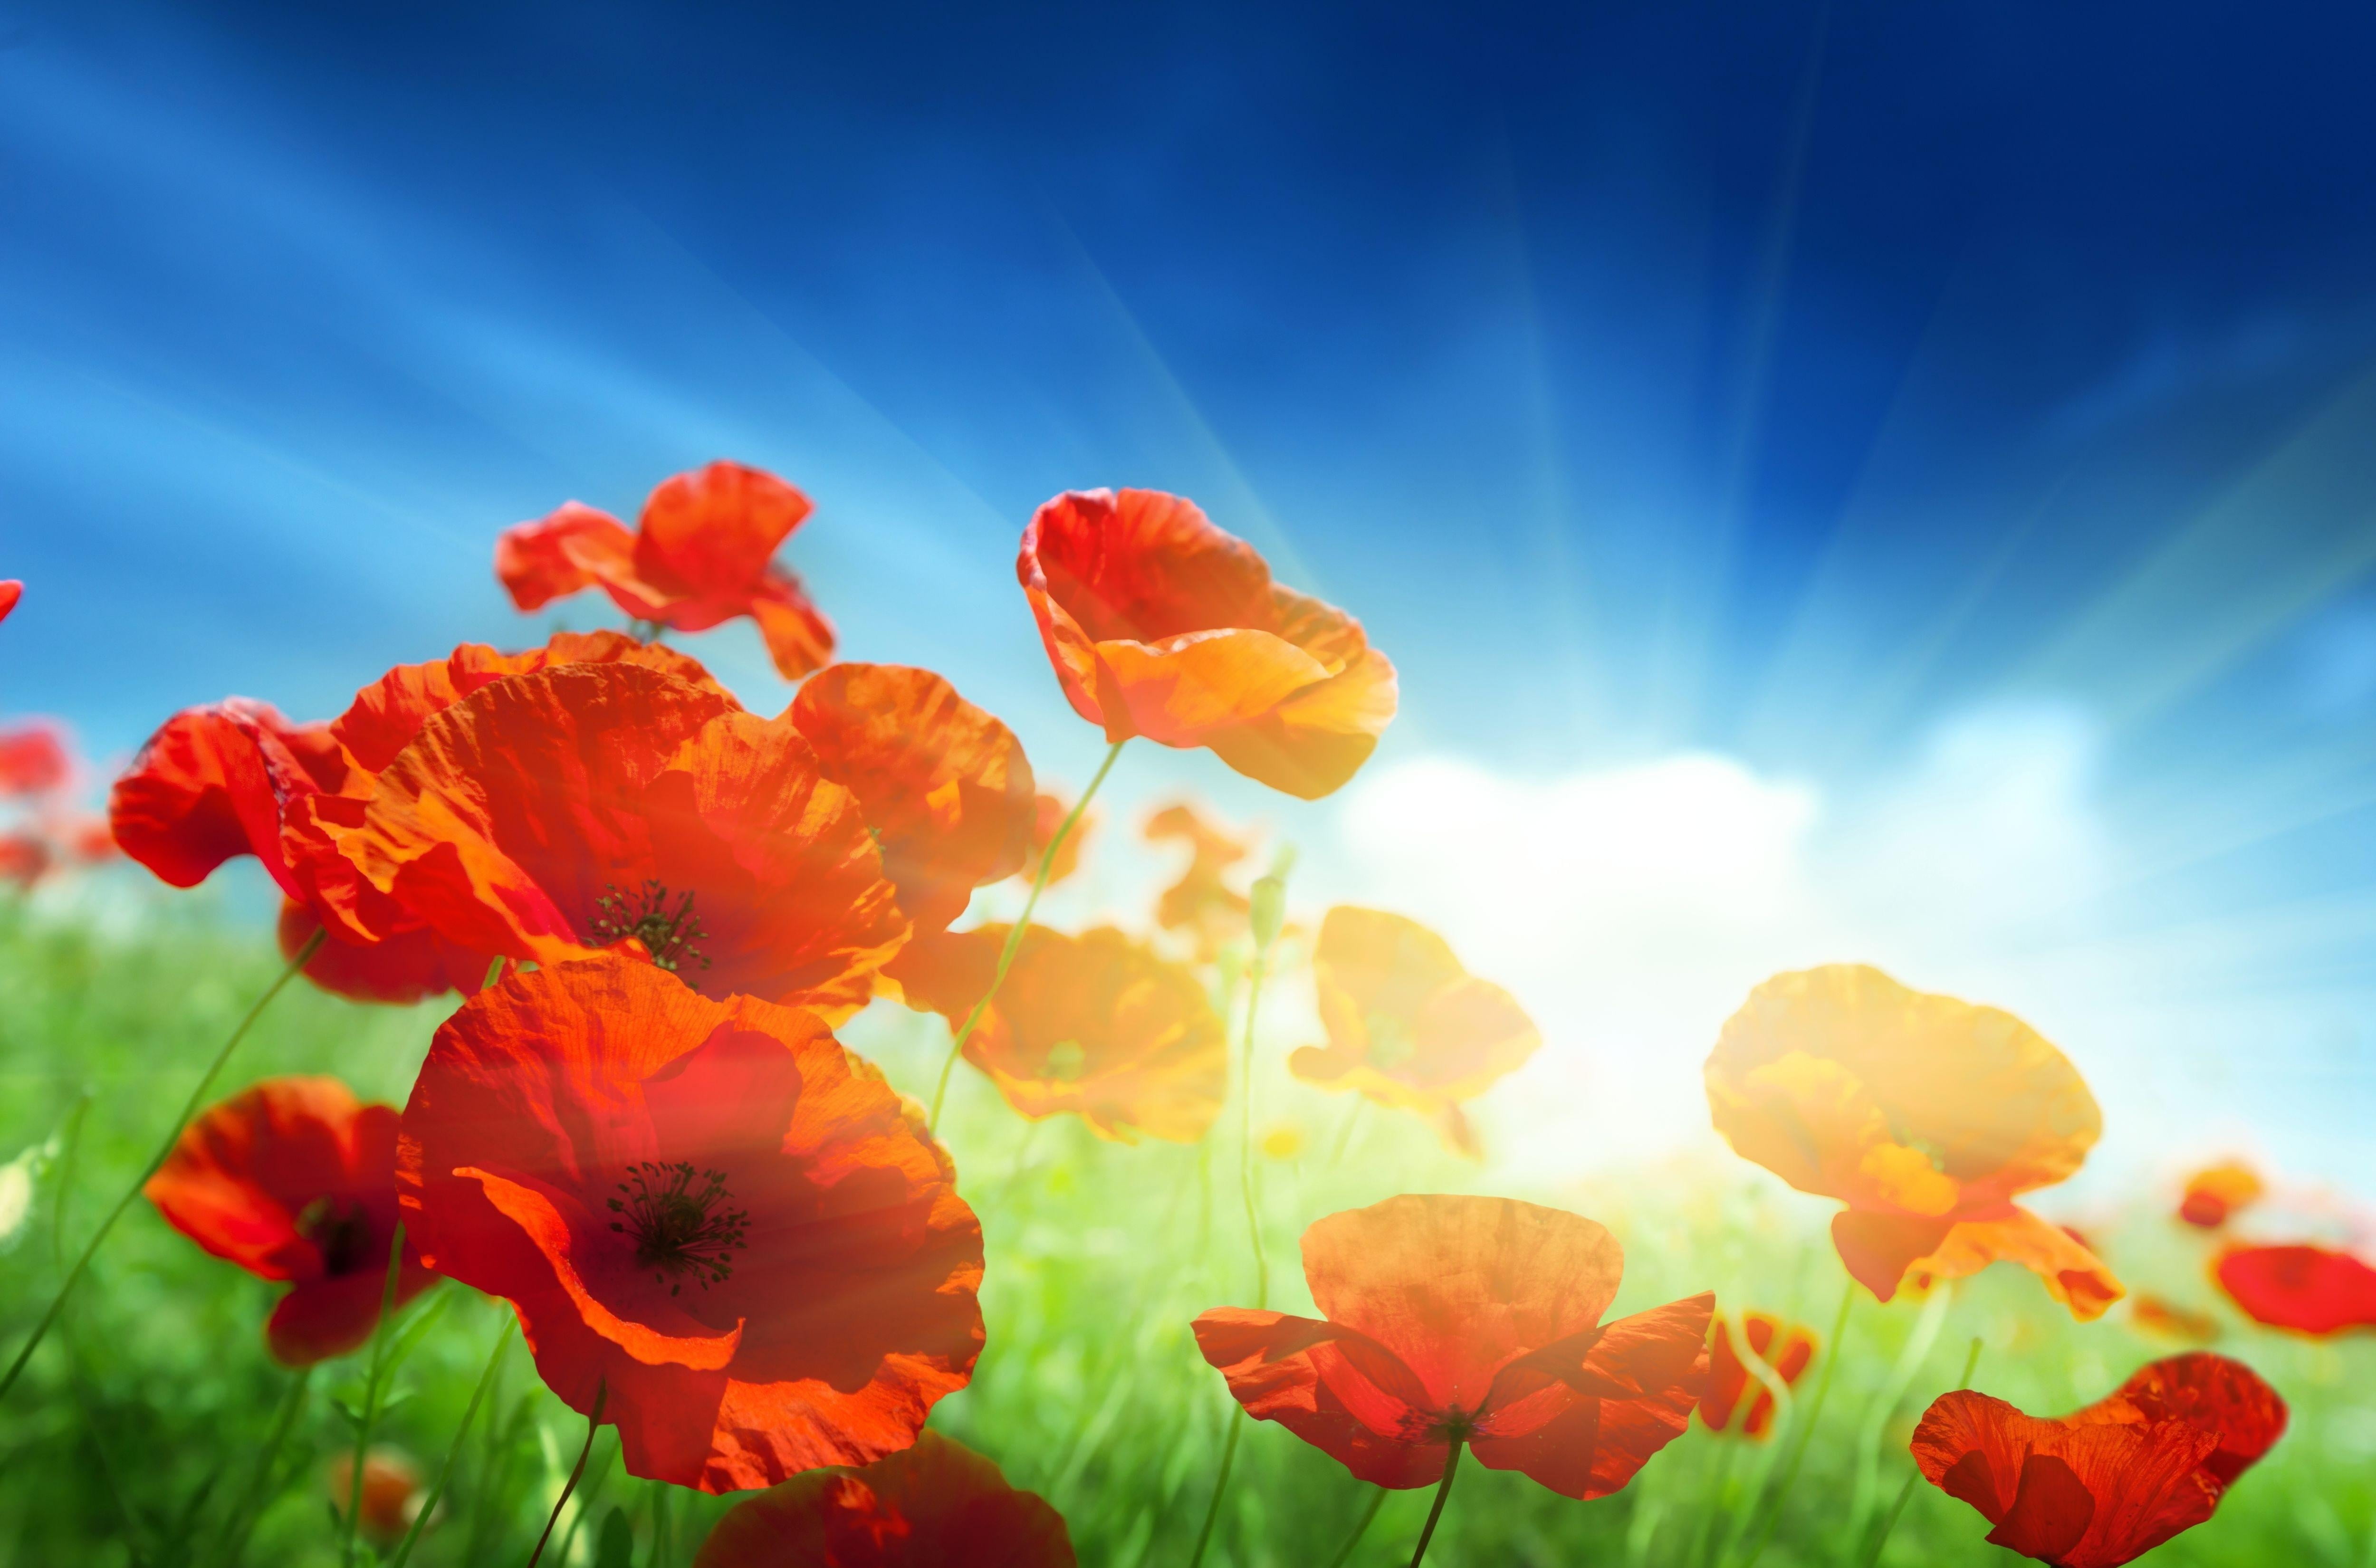 red poppy flowers, poppies, field, sky, sun, rays, light, nature